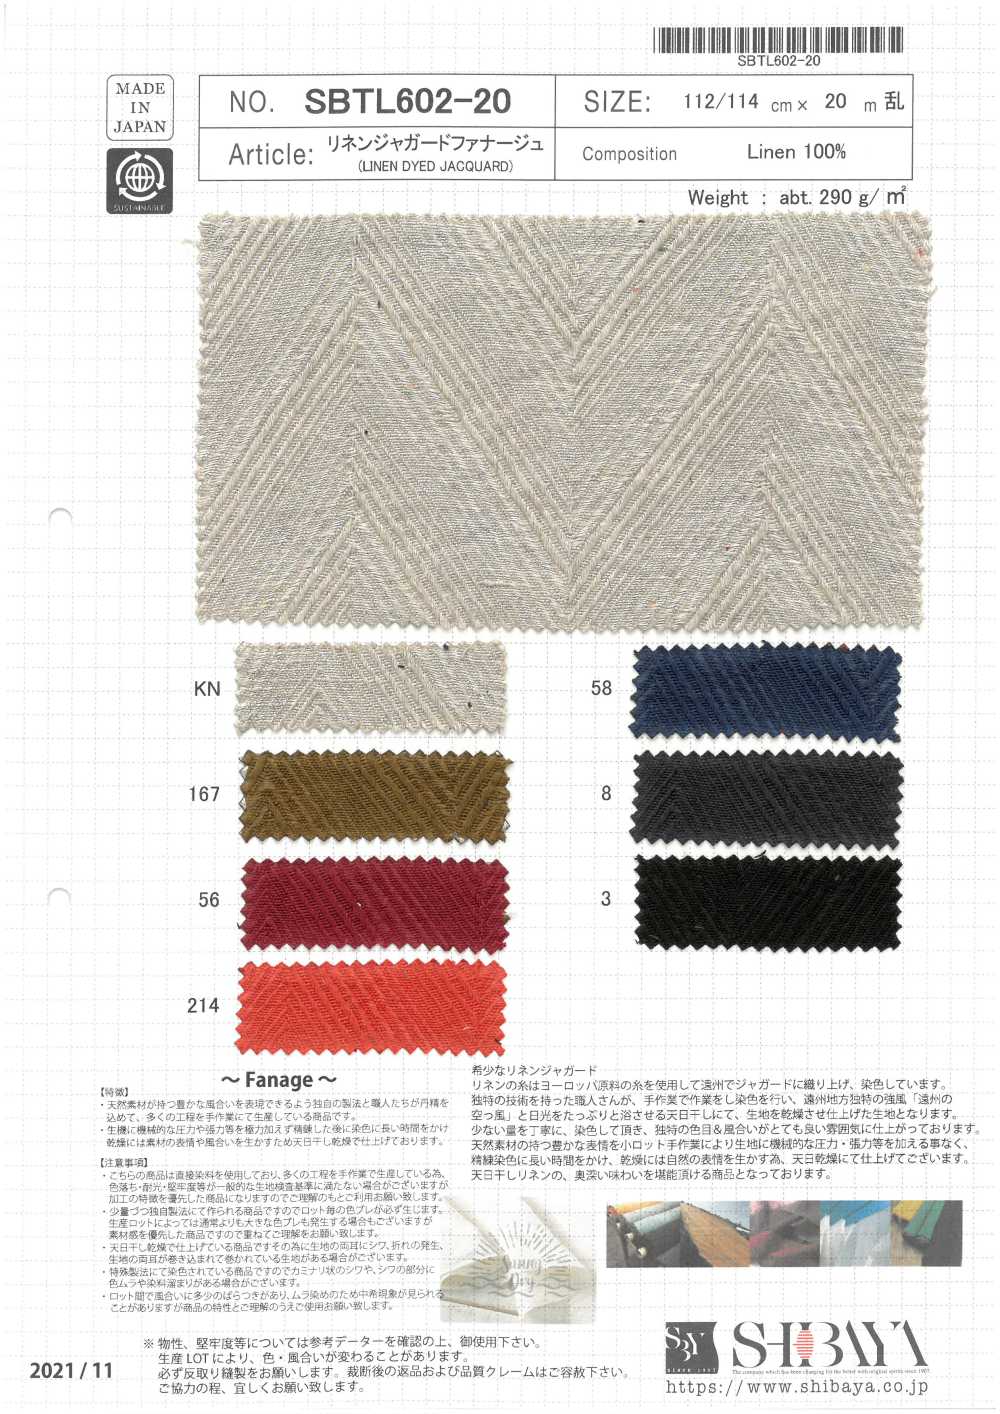 SBTL602-20 Linen Jacquard Fanage[Textile / Fabric] SHIBAYA